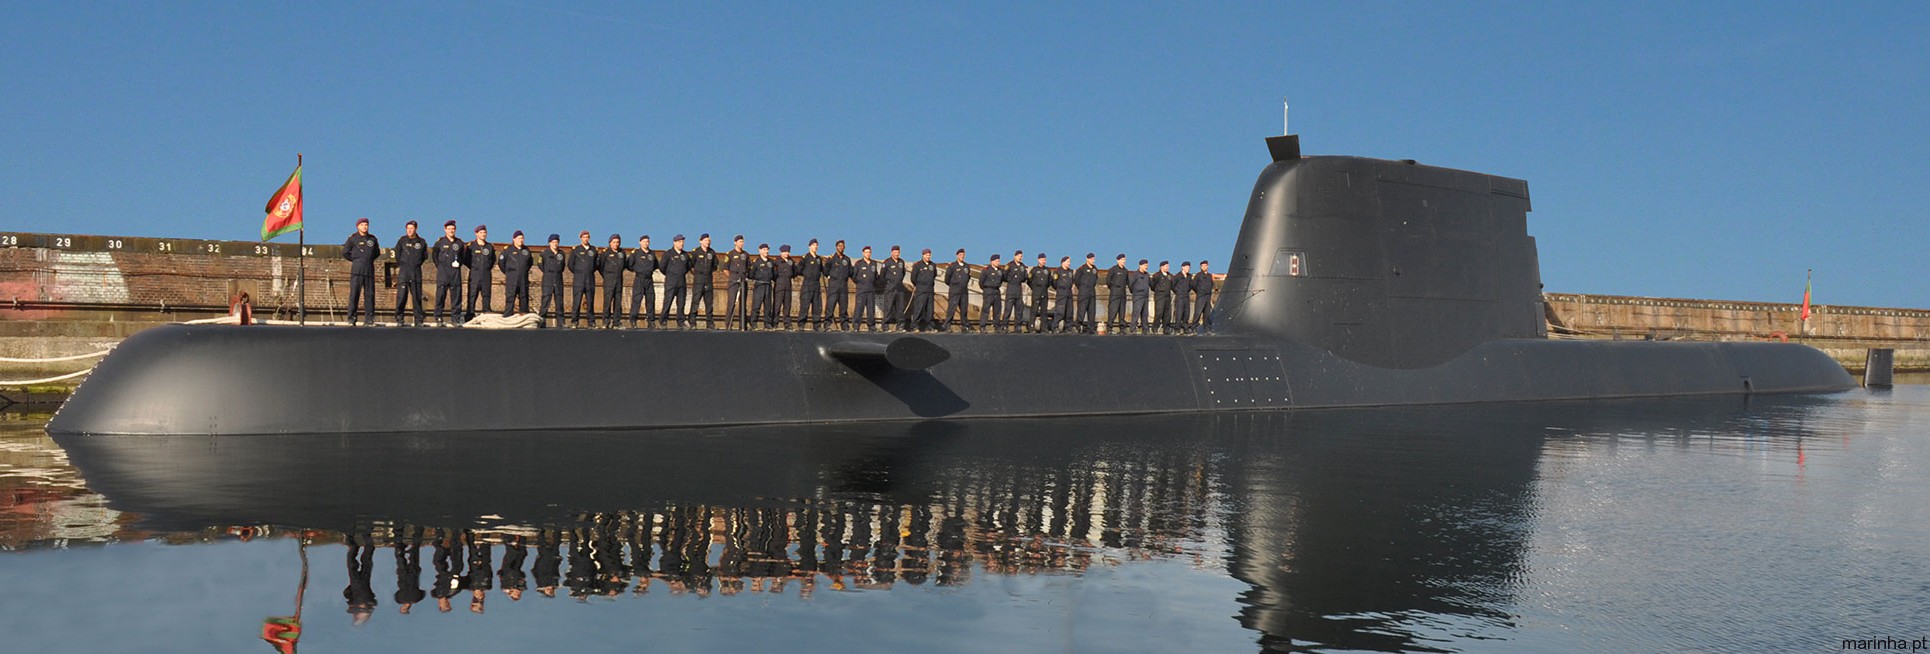 s-160 nrp tridente class type 209pn attack submarine ssk aip portuguese navy marinha 09